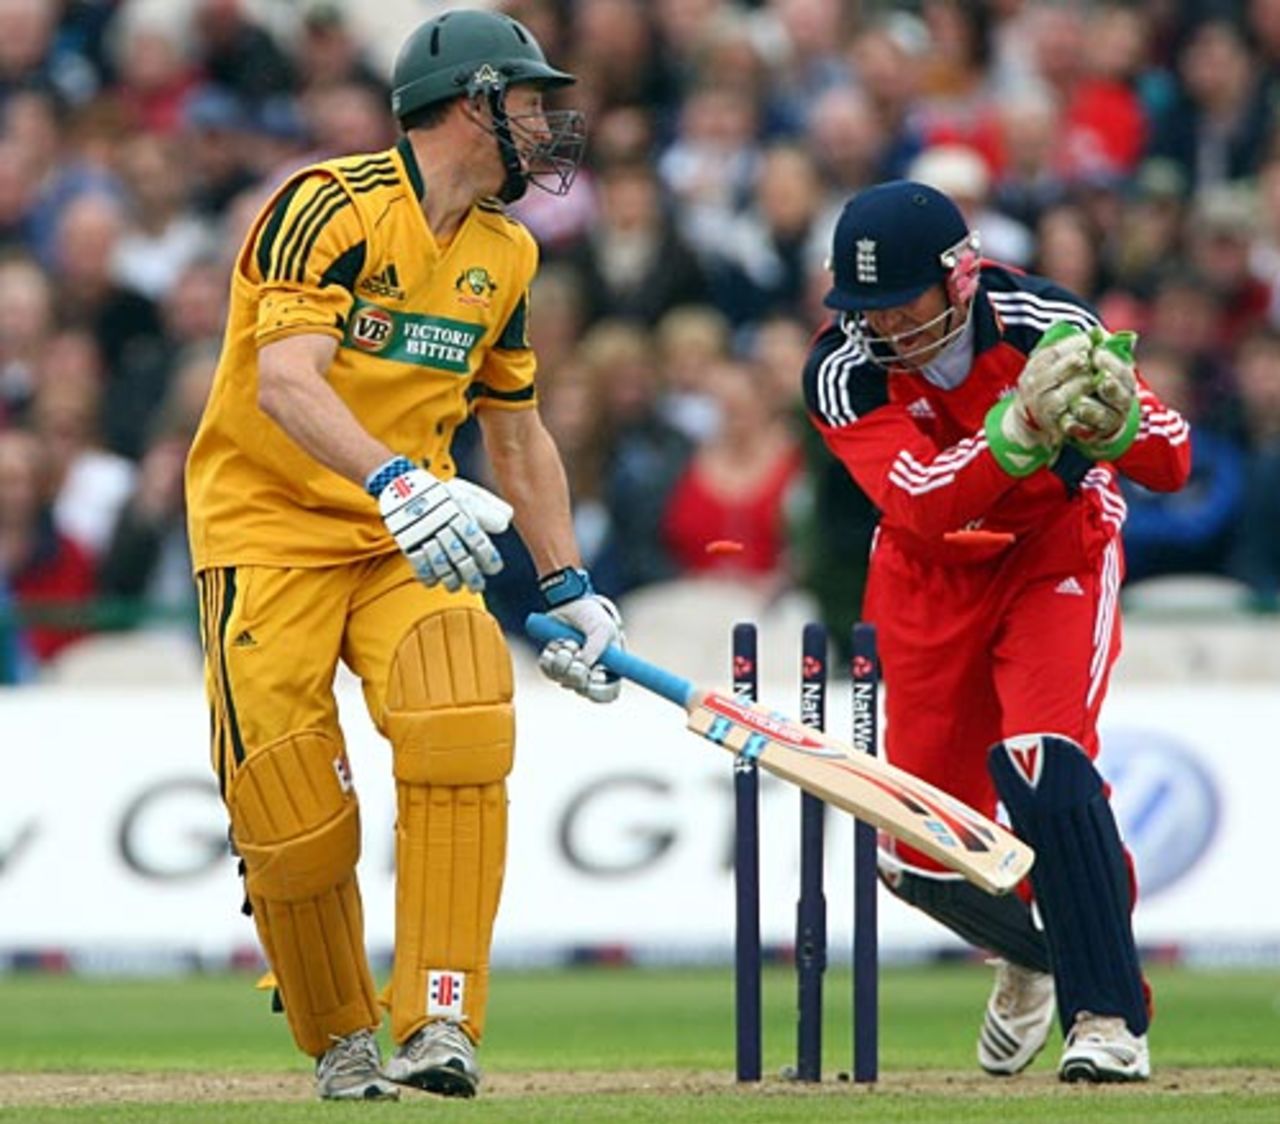 David Hussey was stumped by Matt Prior, England v Australia, 1st Twenty20 international, Old Trafford, August 30, 2009